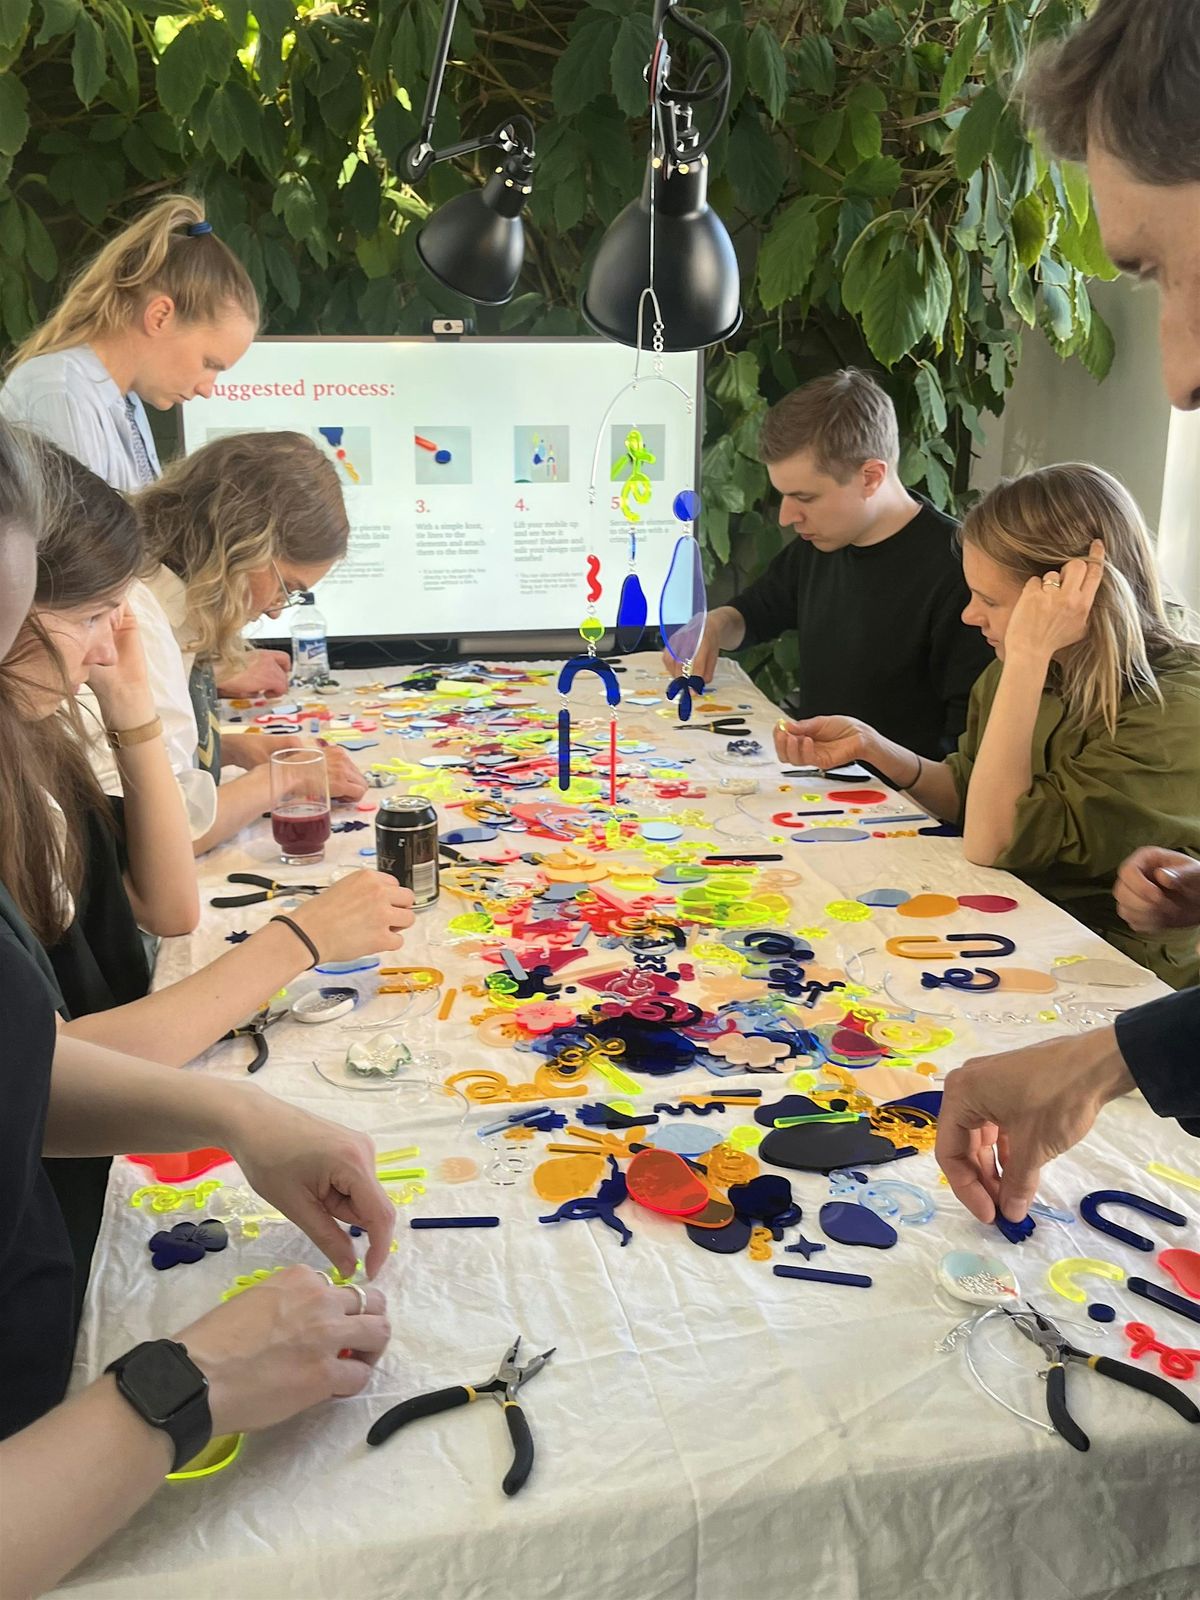 Suncatcher Workshop - Making Mobiles at Art Studio Amsterdam